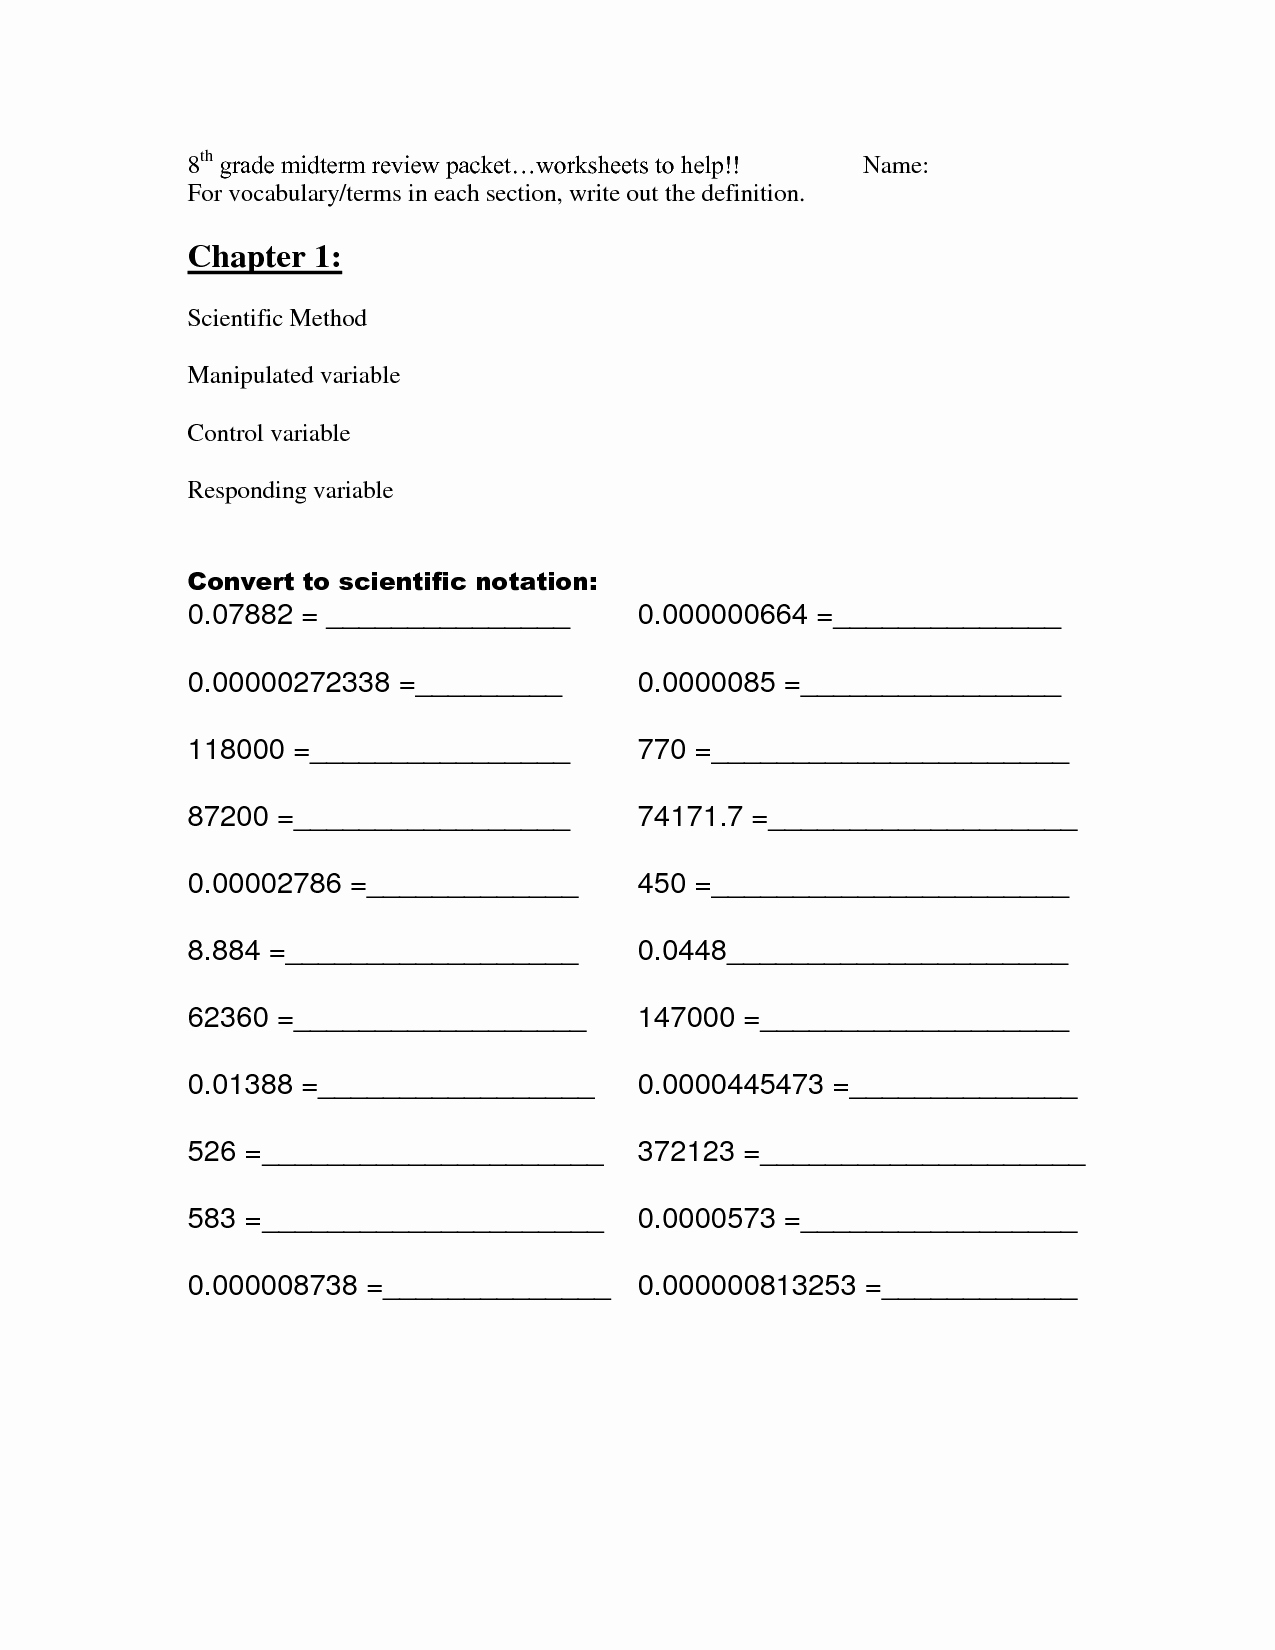 Grammar Worksheets for 8th Graders Best Of Vocabulary Worksheets for 8th Graders Vocabulary Lists